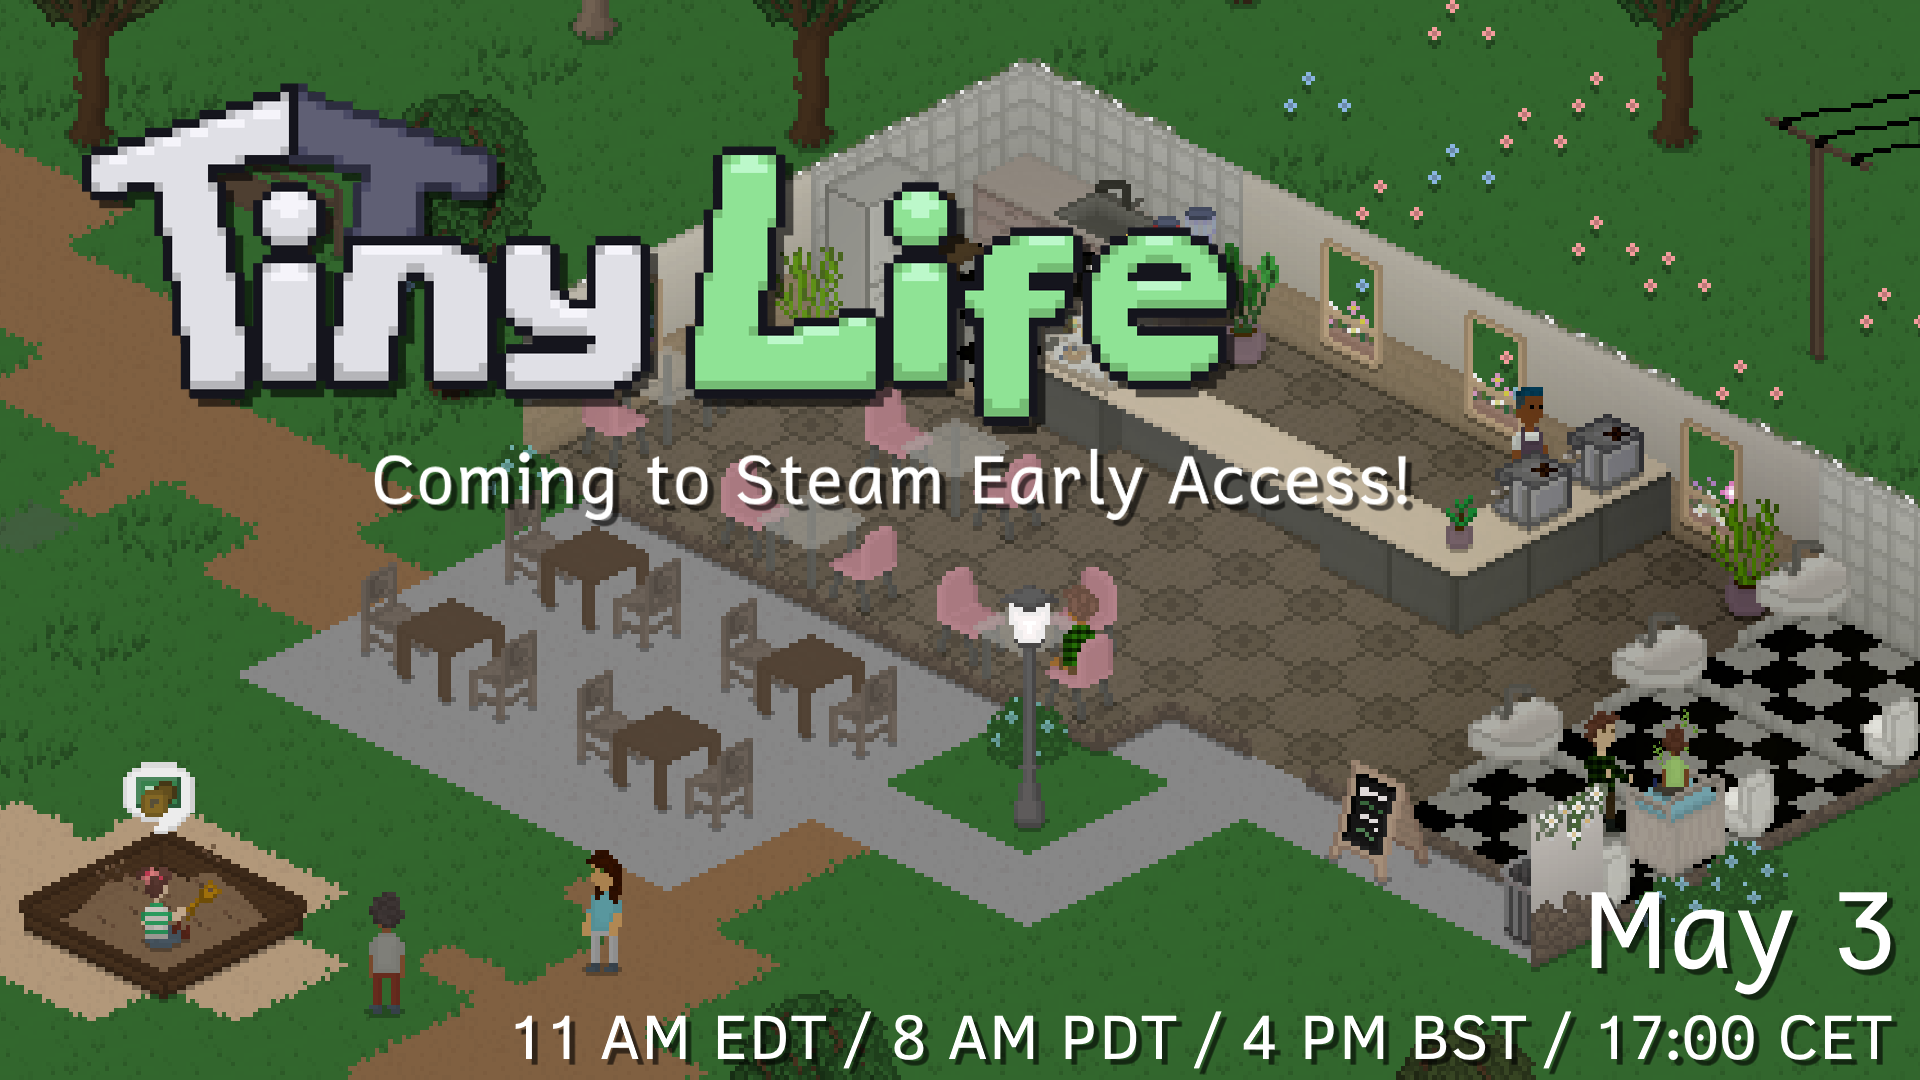 Tiny Life on Steam